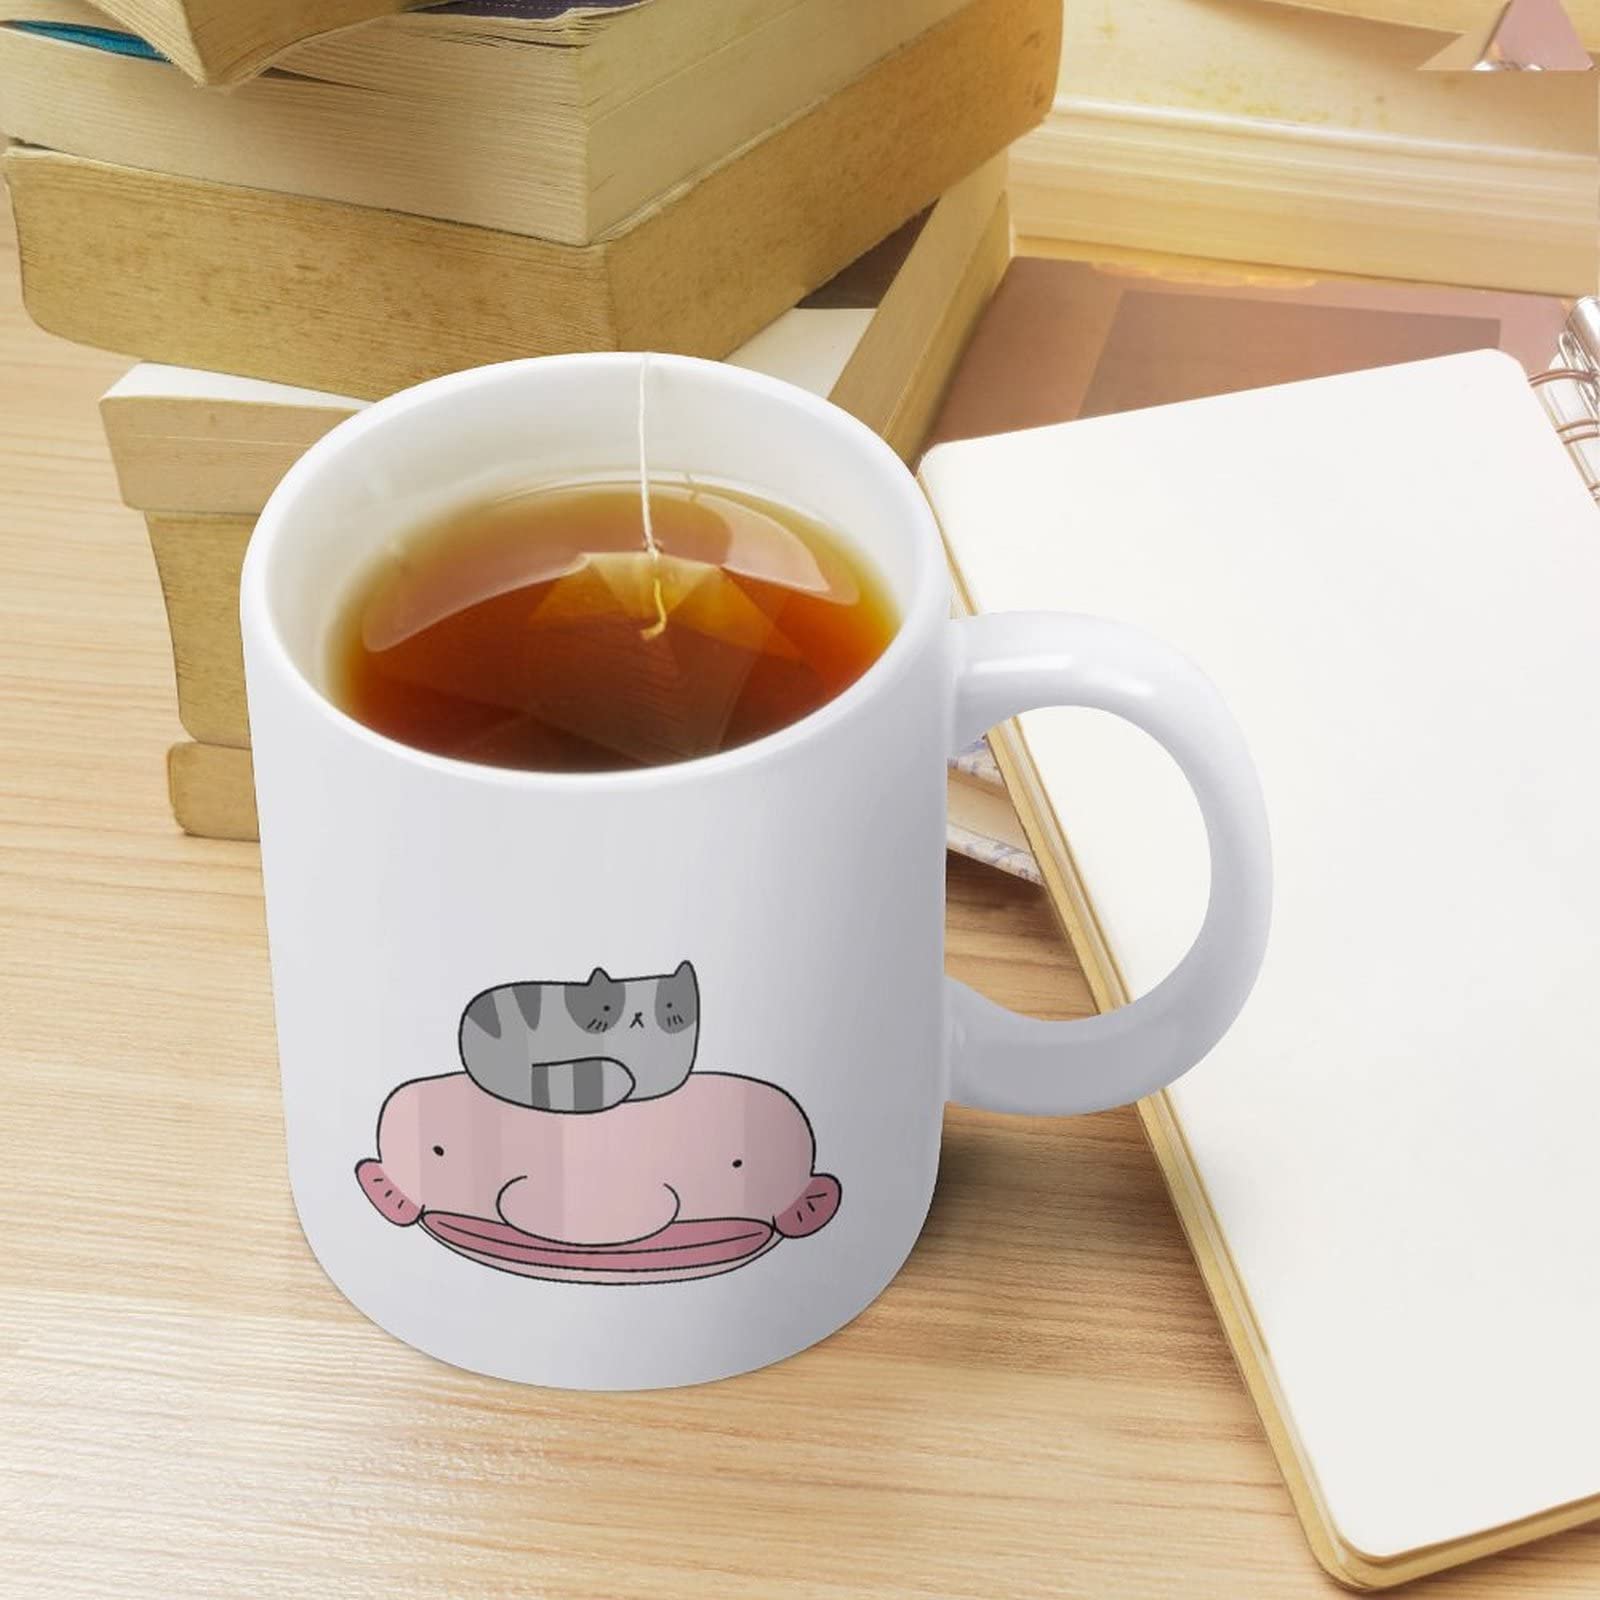 Cute Blobfish and Cat Mugs Ceramic Tea Cup Print Coffee Mug Drinking Cups with Handles